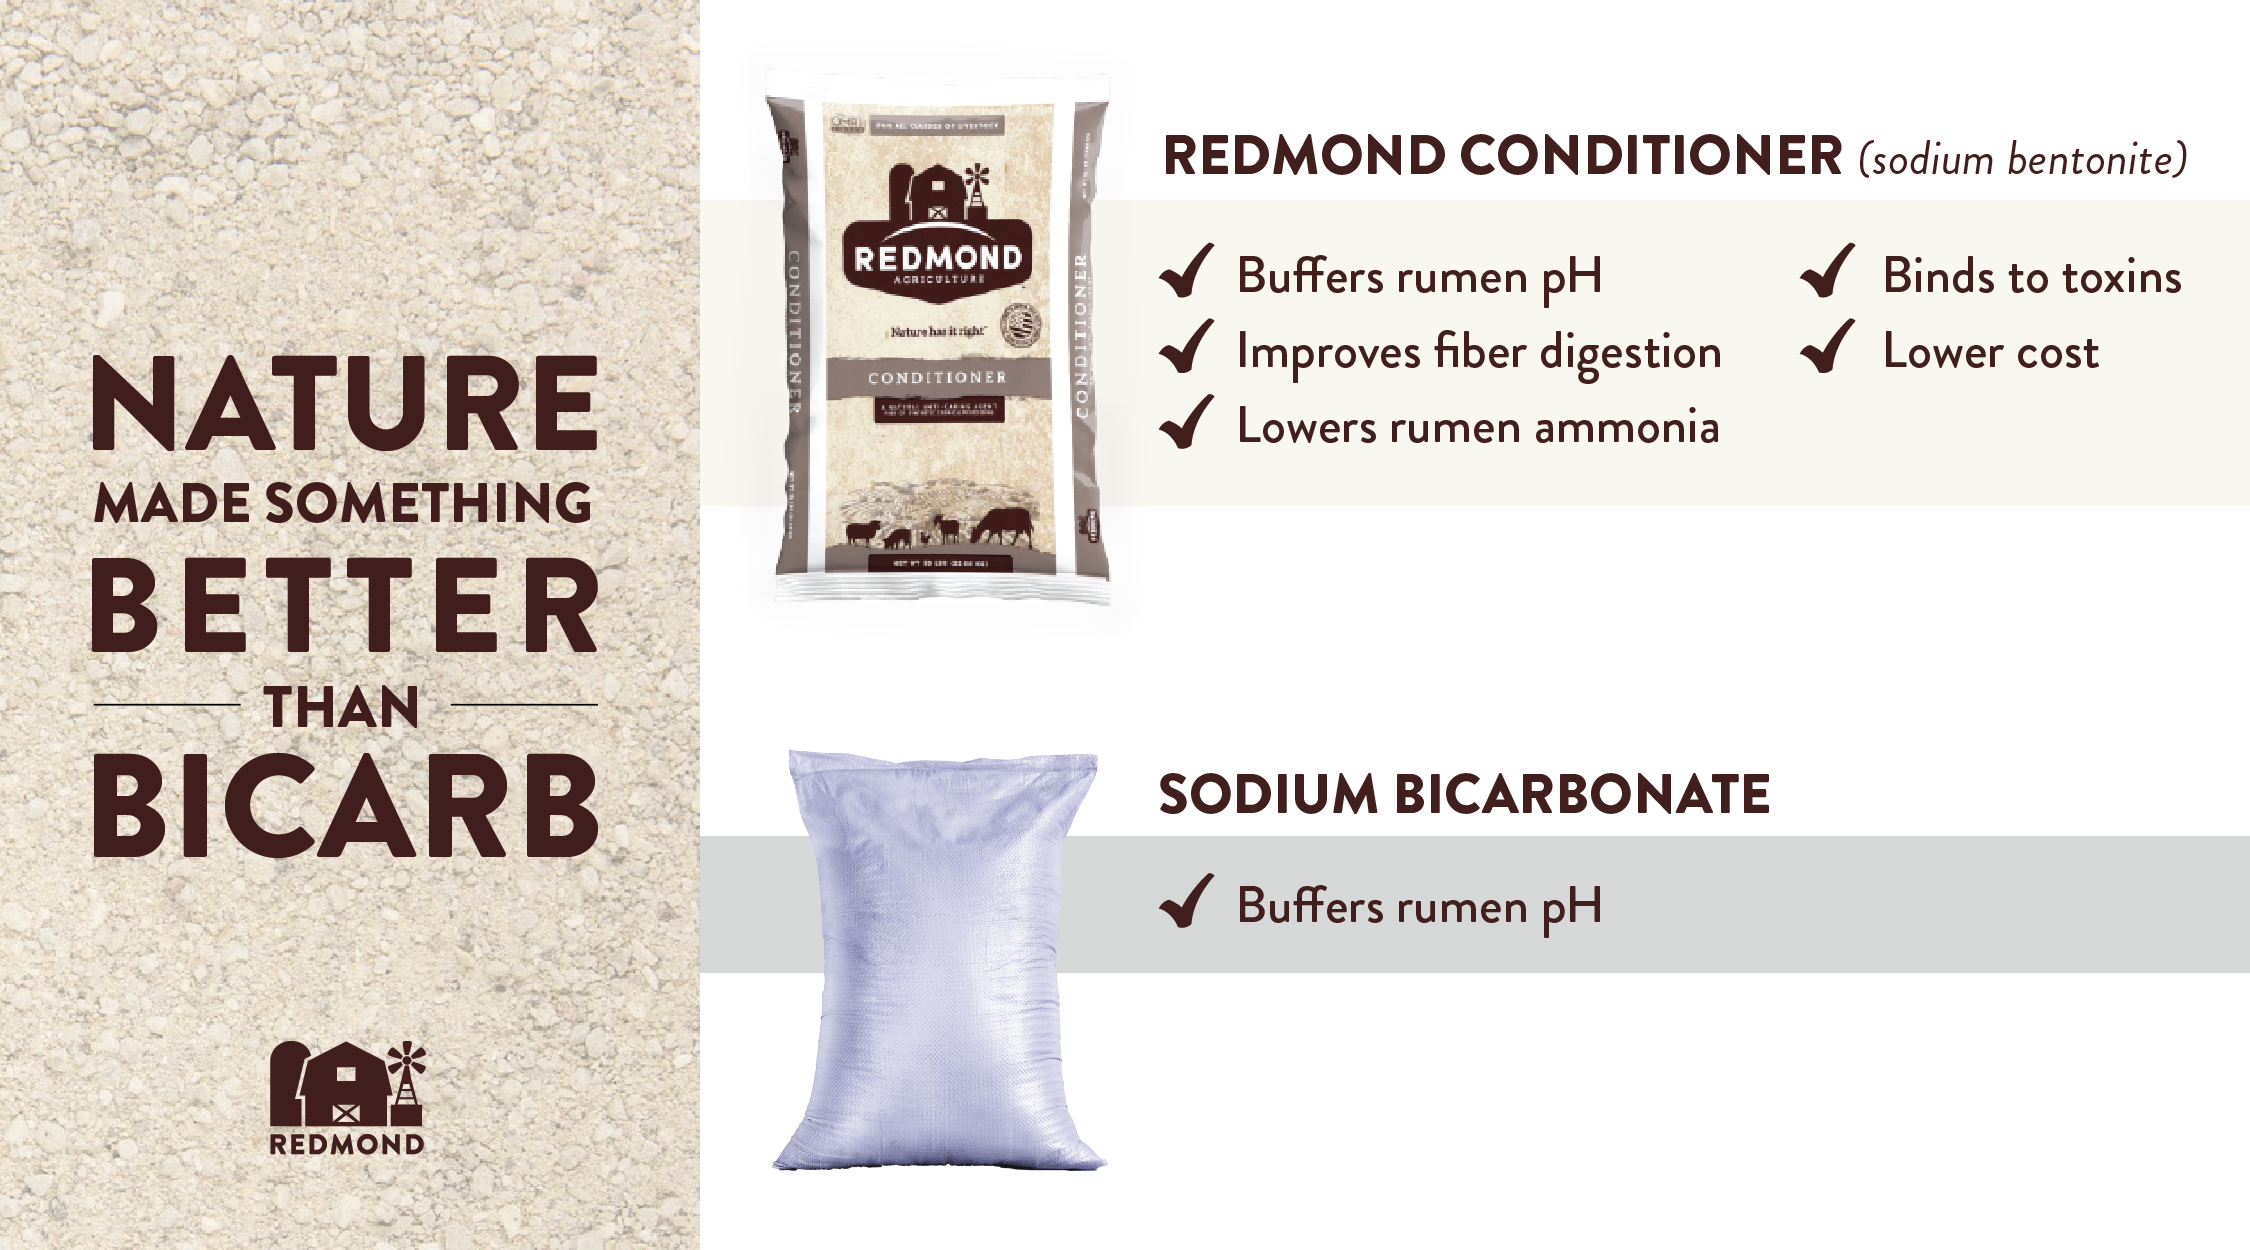 Sodium bentonite is a replacement for feed grade sodium bicarbonate